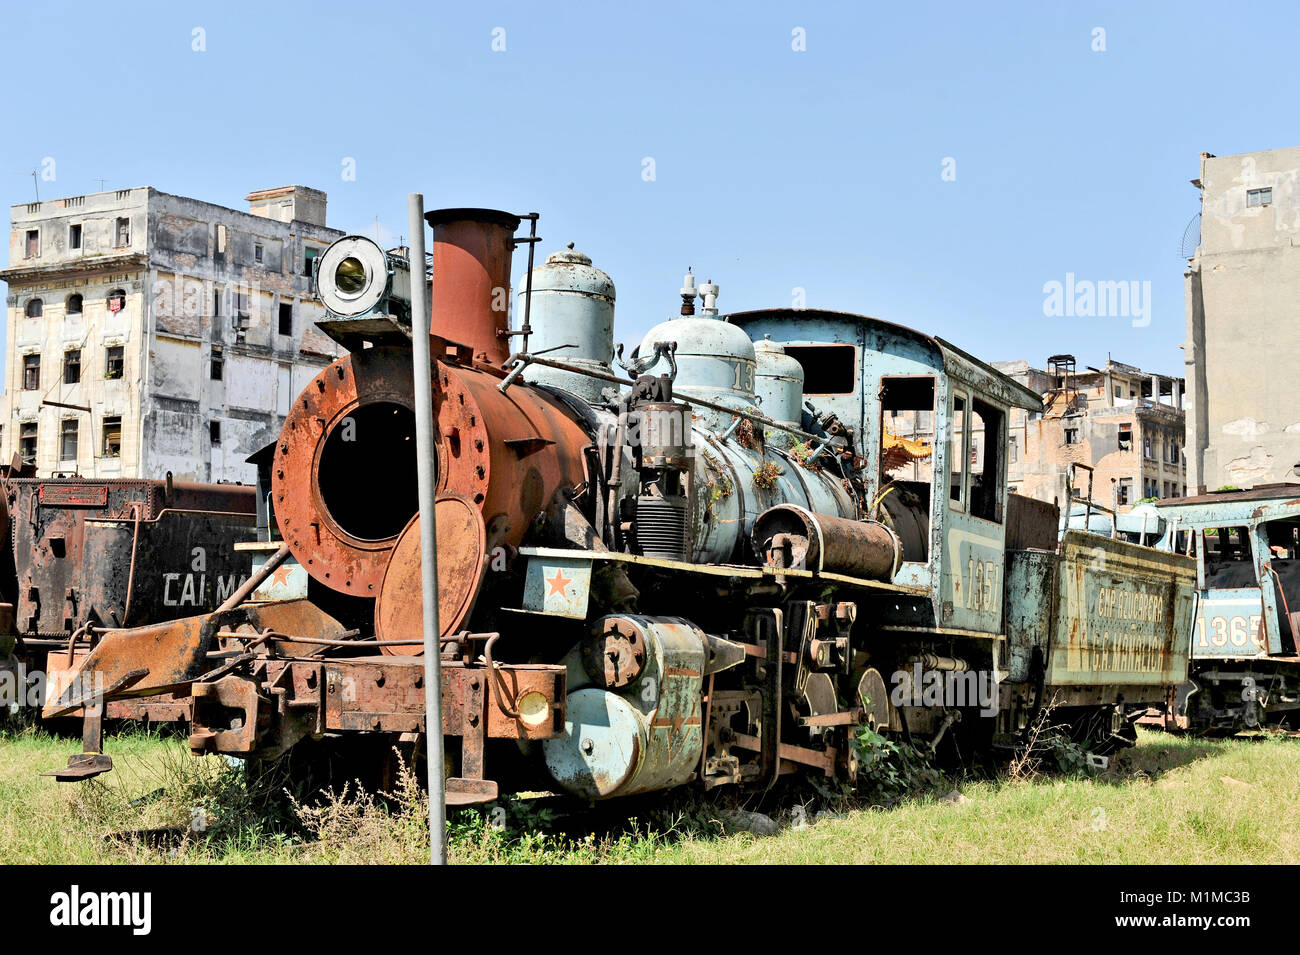 HAVANA, CUBA, MAY 9, 2009. A fied full of abandoned old locomotives in Havana, Cuba, on May 9th, 2009. Stock Photo